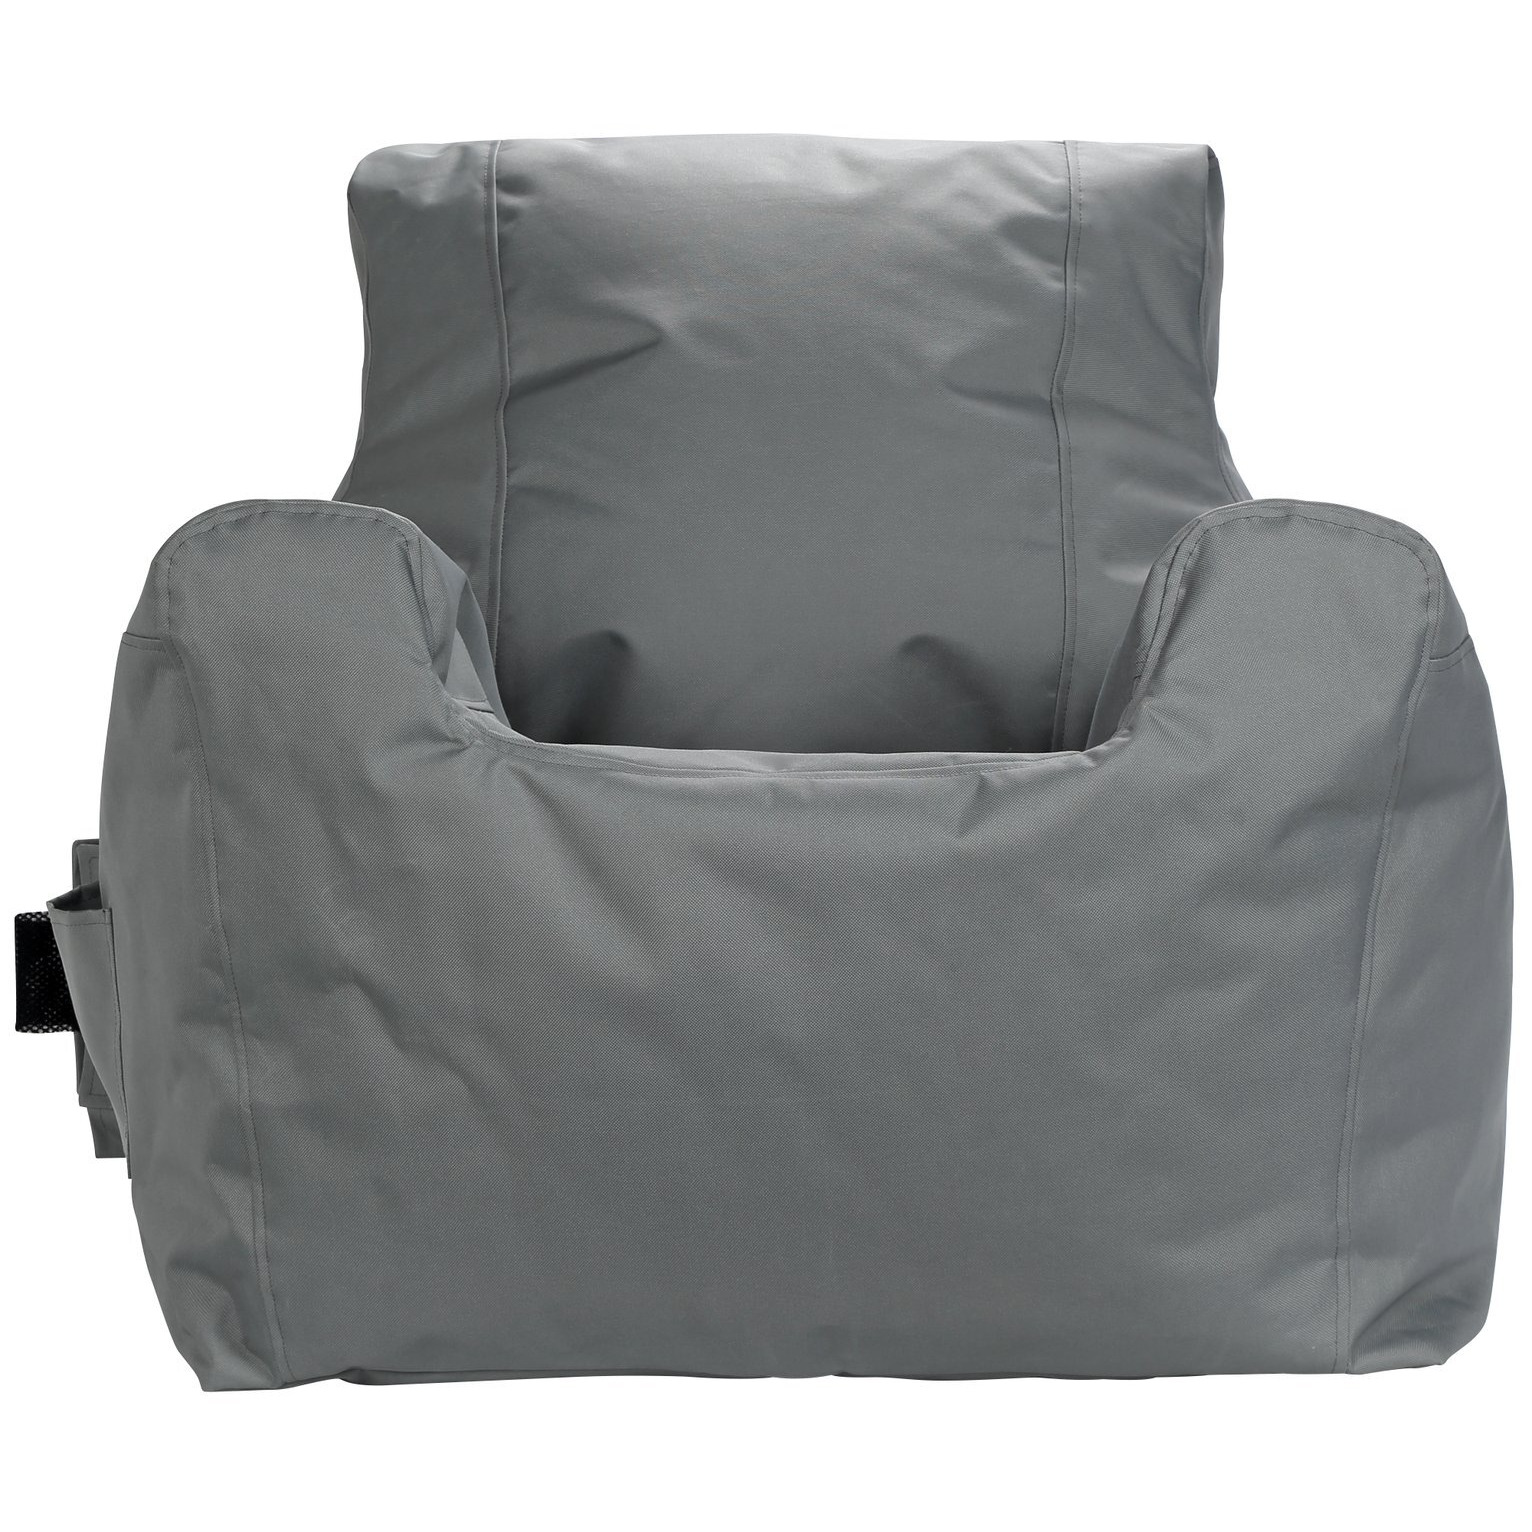 Kaikoo  Large Grey Teenager Bean Bag Chair - image 1